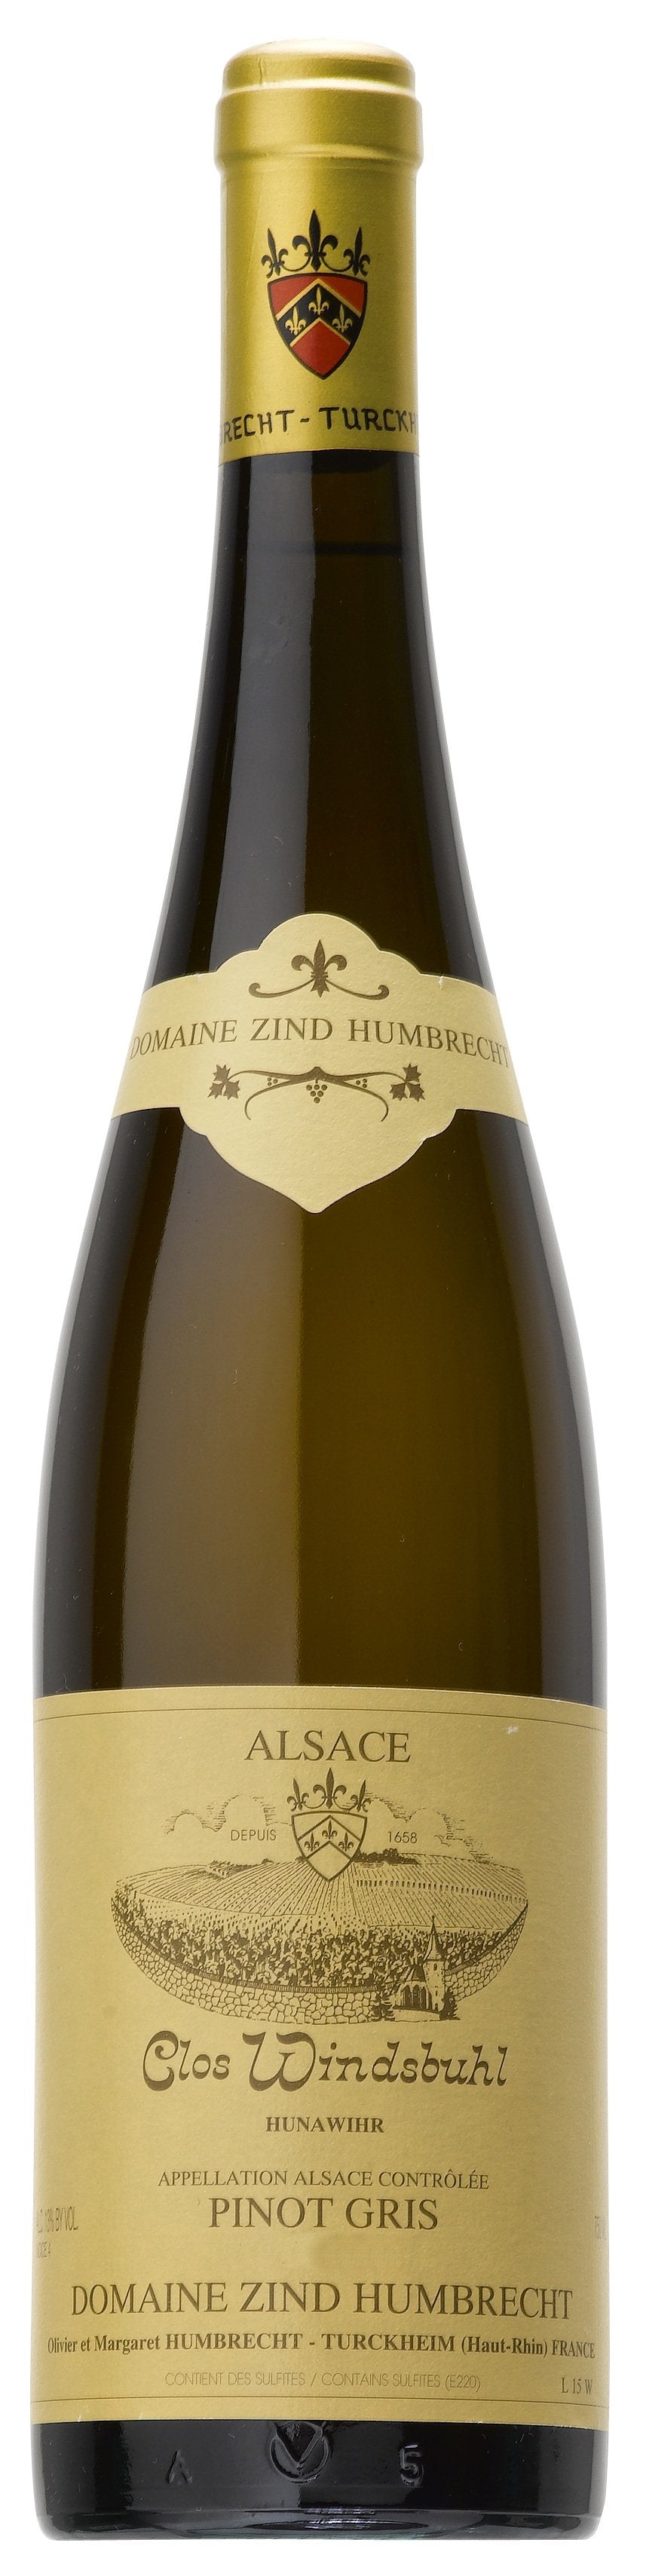 Zind-Humbrecht Pinot Gris Clos Windsbuhl 2017